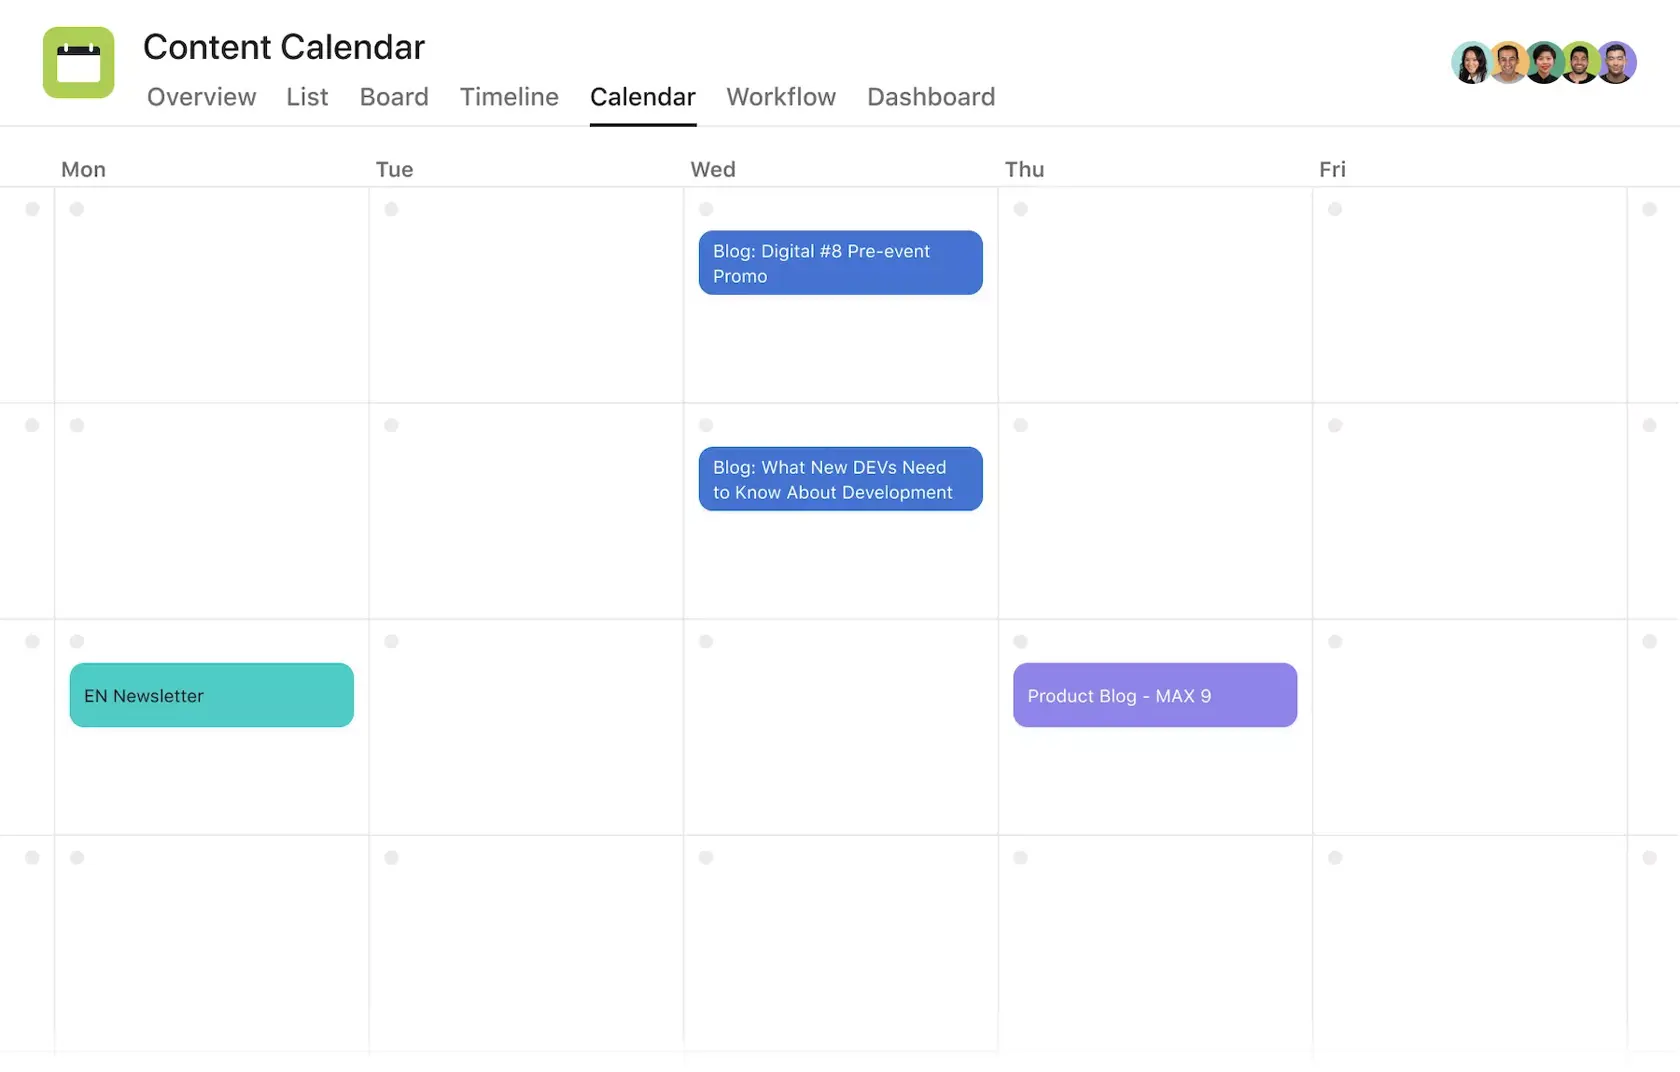 [Product UI] Content Calendar project example (Calendar view)